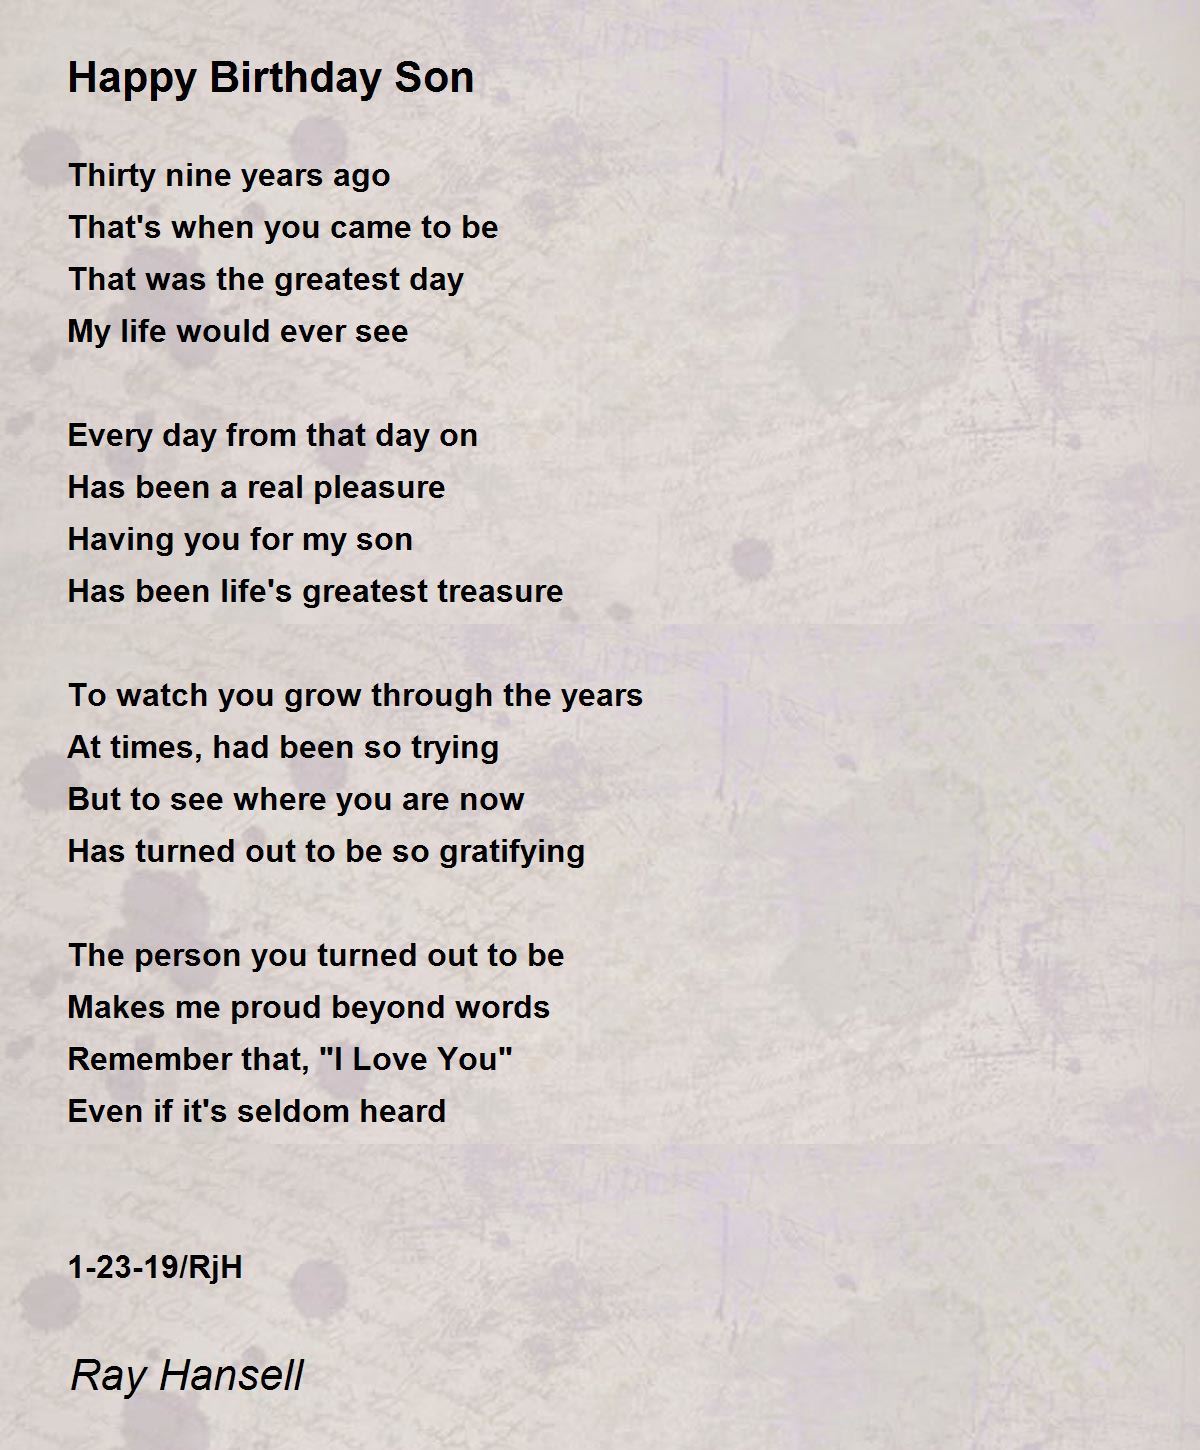 Happy Birthday Son - Happy Birthday Son Poem by Ray Hansell